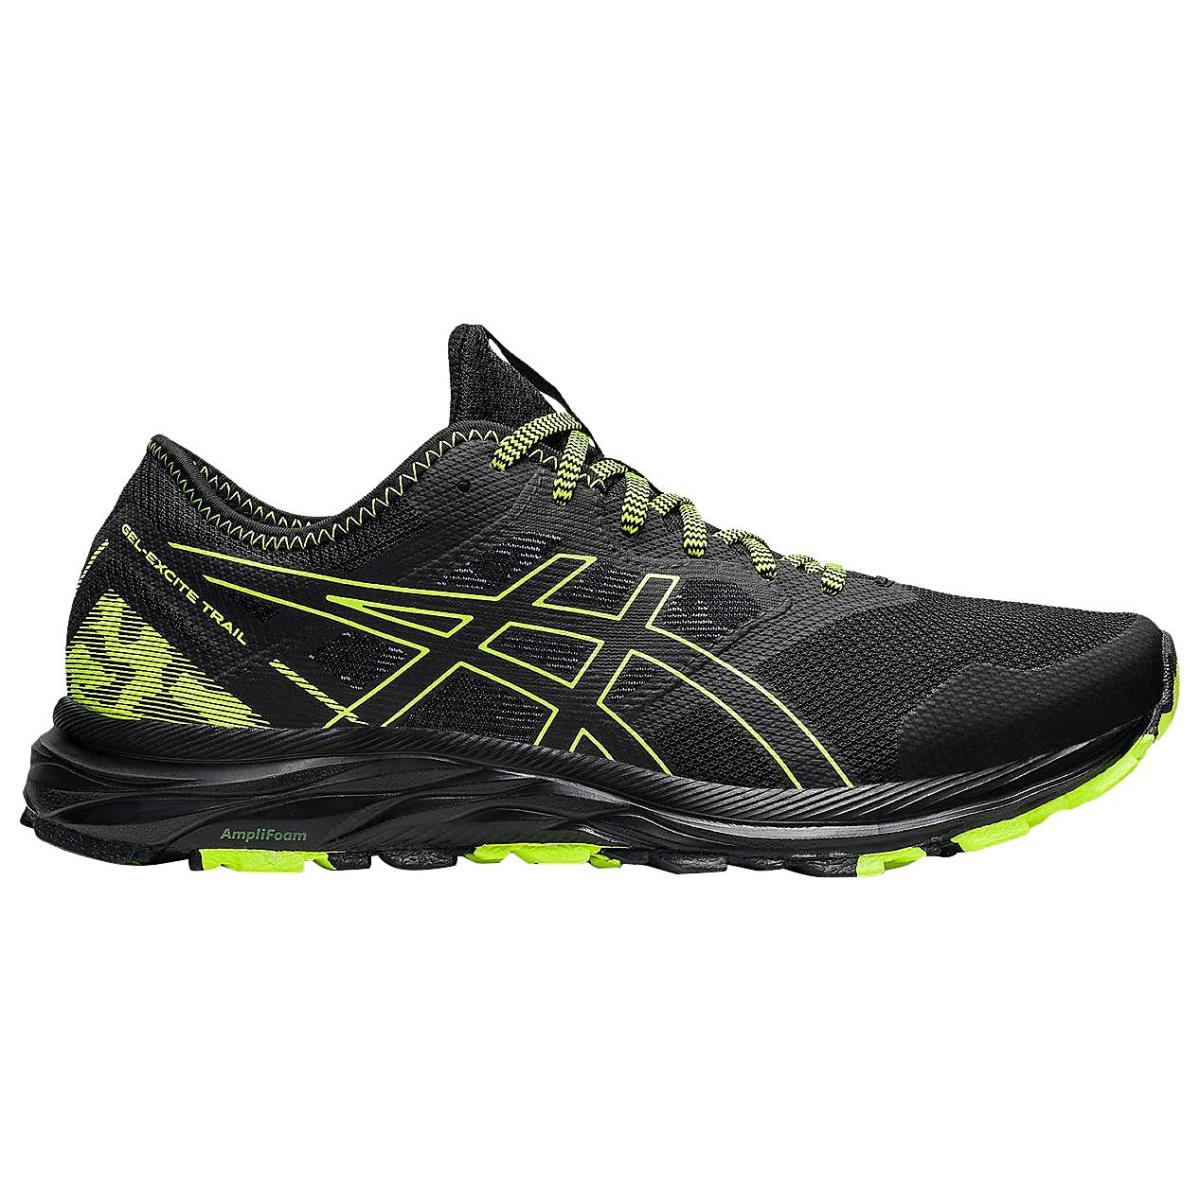 Asics Mens Gel Excite Trail Running Shoes Black/Hazard Green